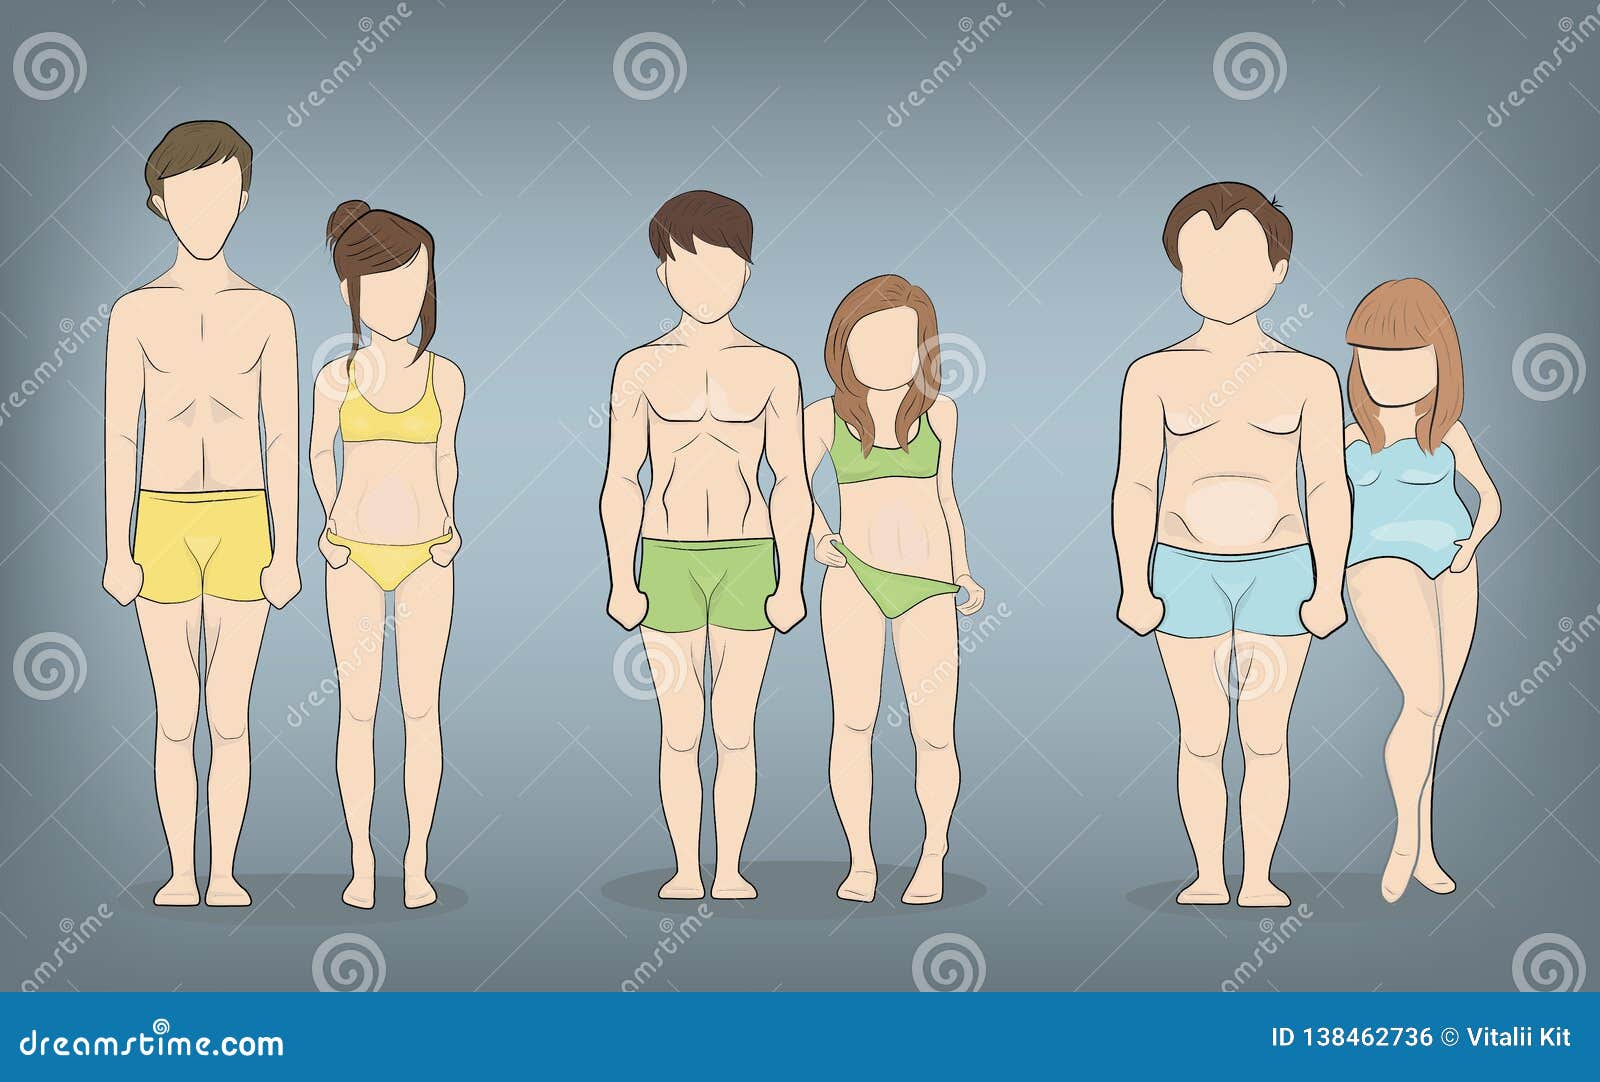 Free Vector  Human body types men and women as endomorph ectomorph and  mesomorph